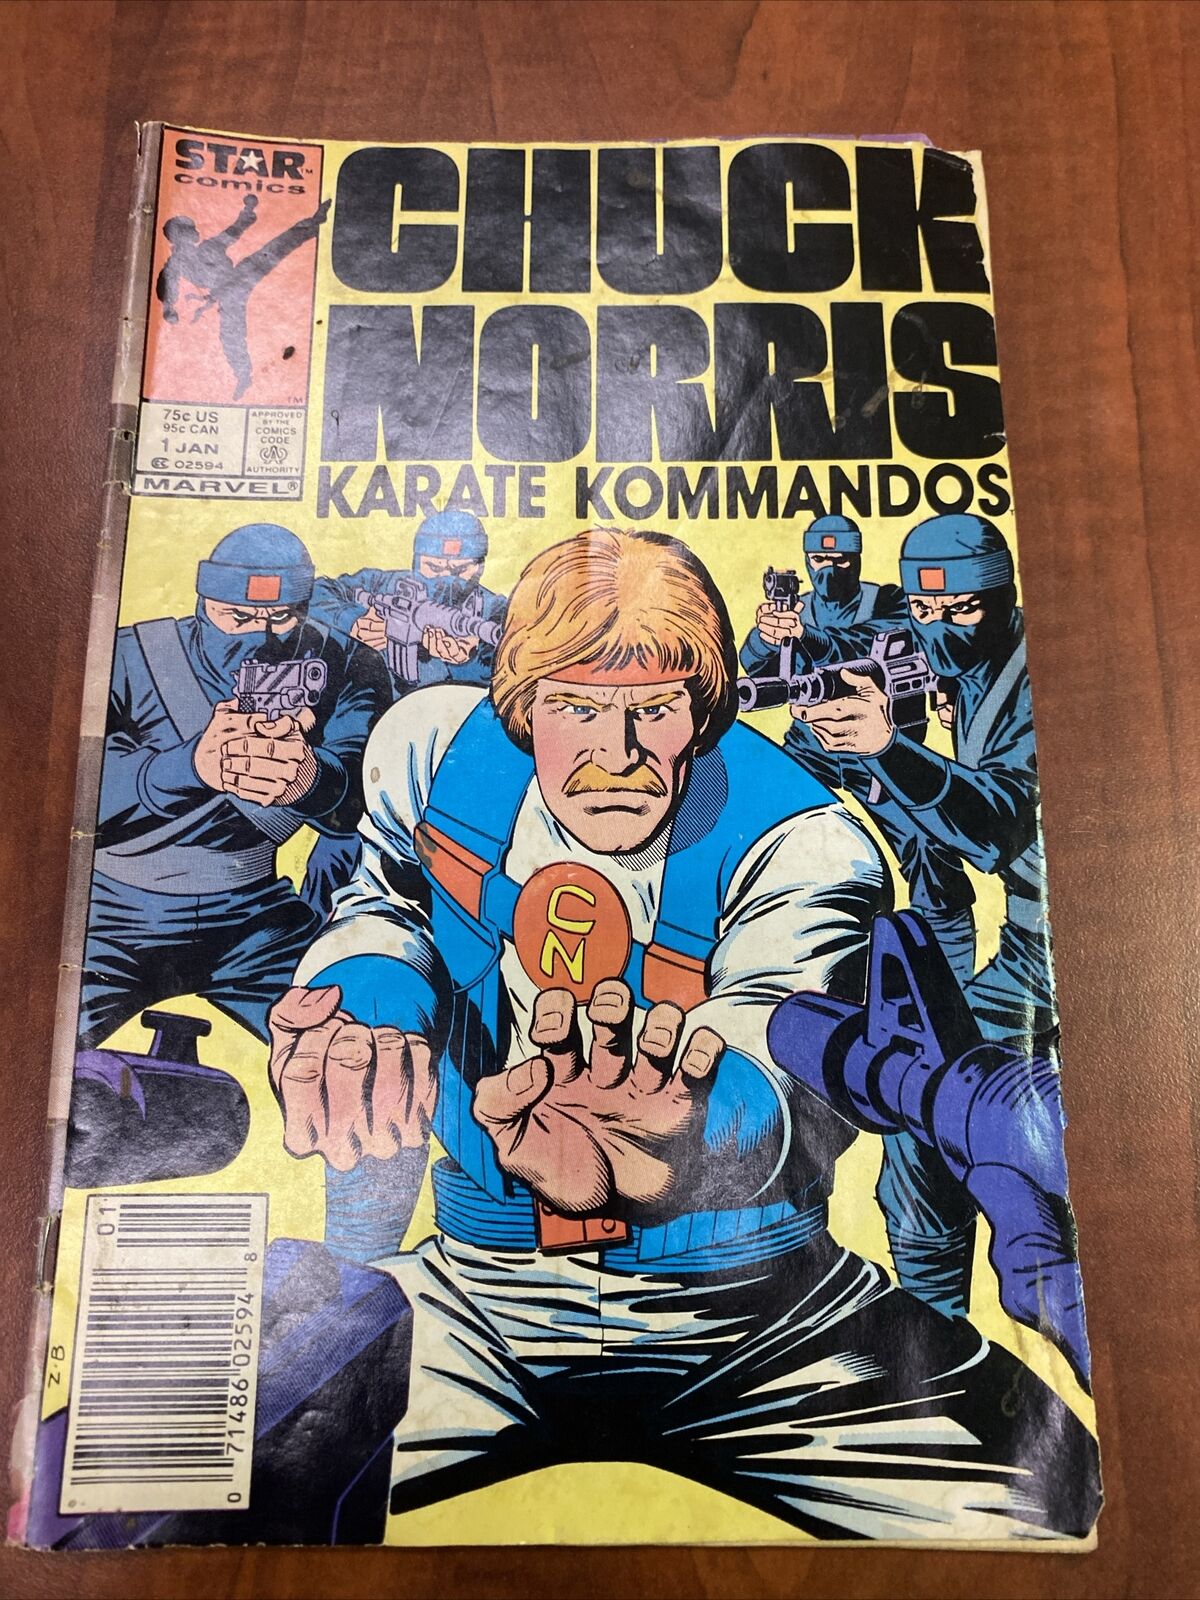 Chuck Norris Karate Kommandos #1 / Marvel Star Comics 1987